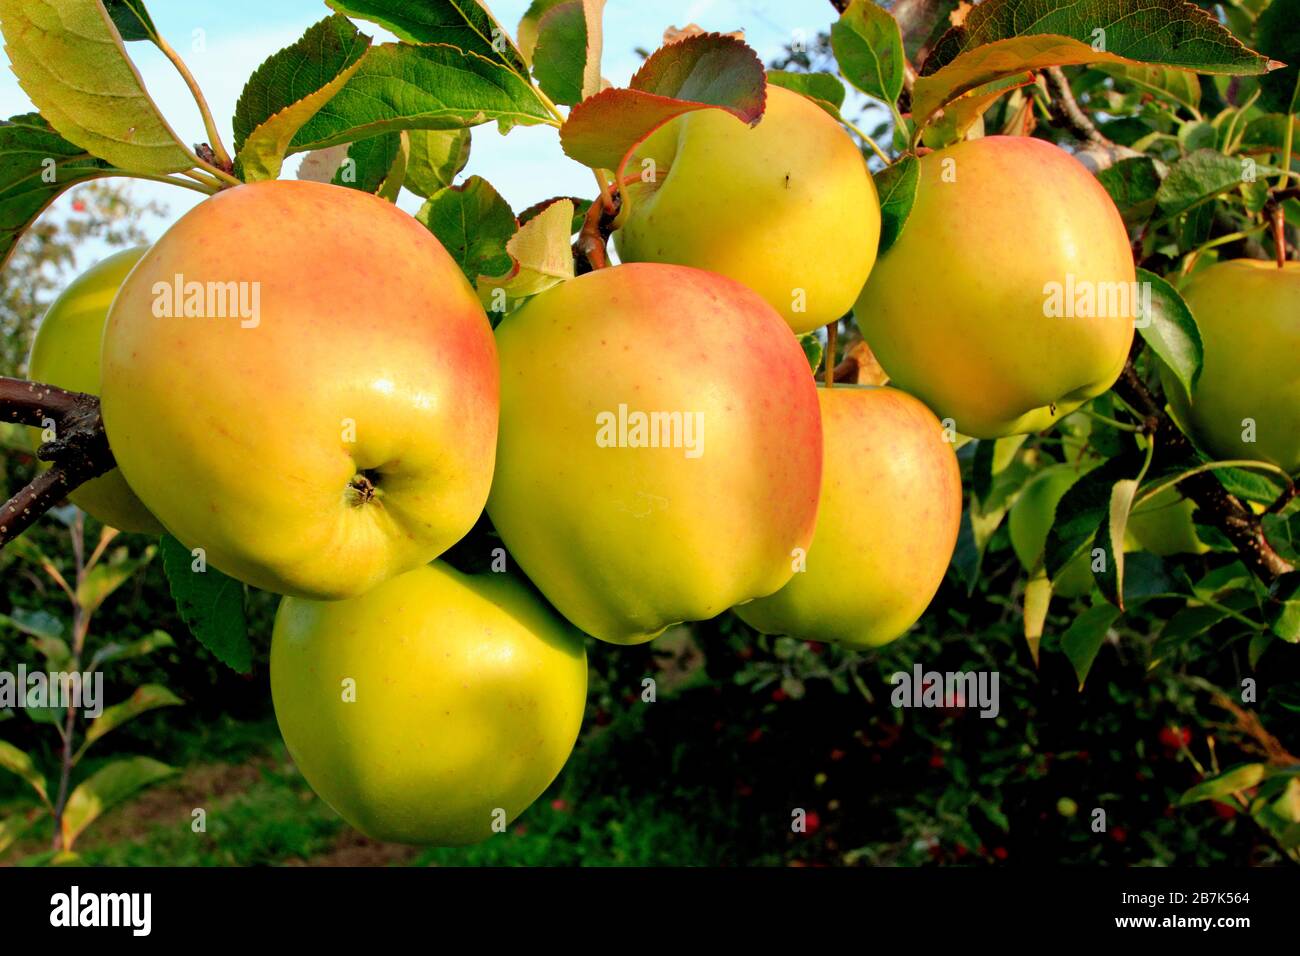 golden delicious apples Stock Photo